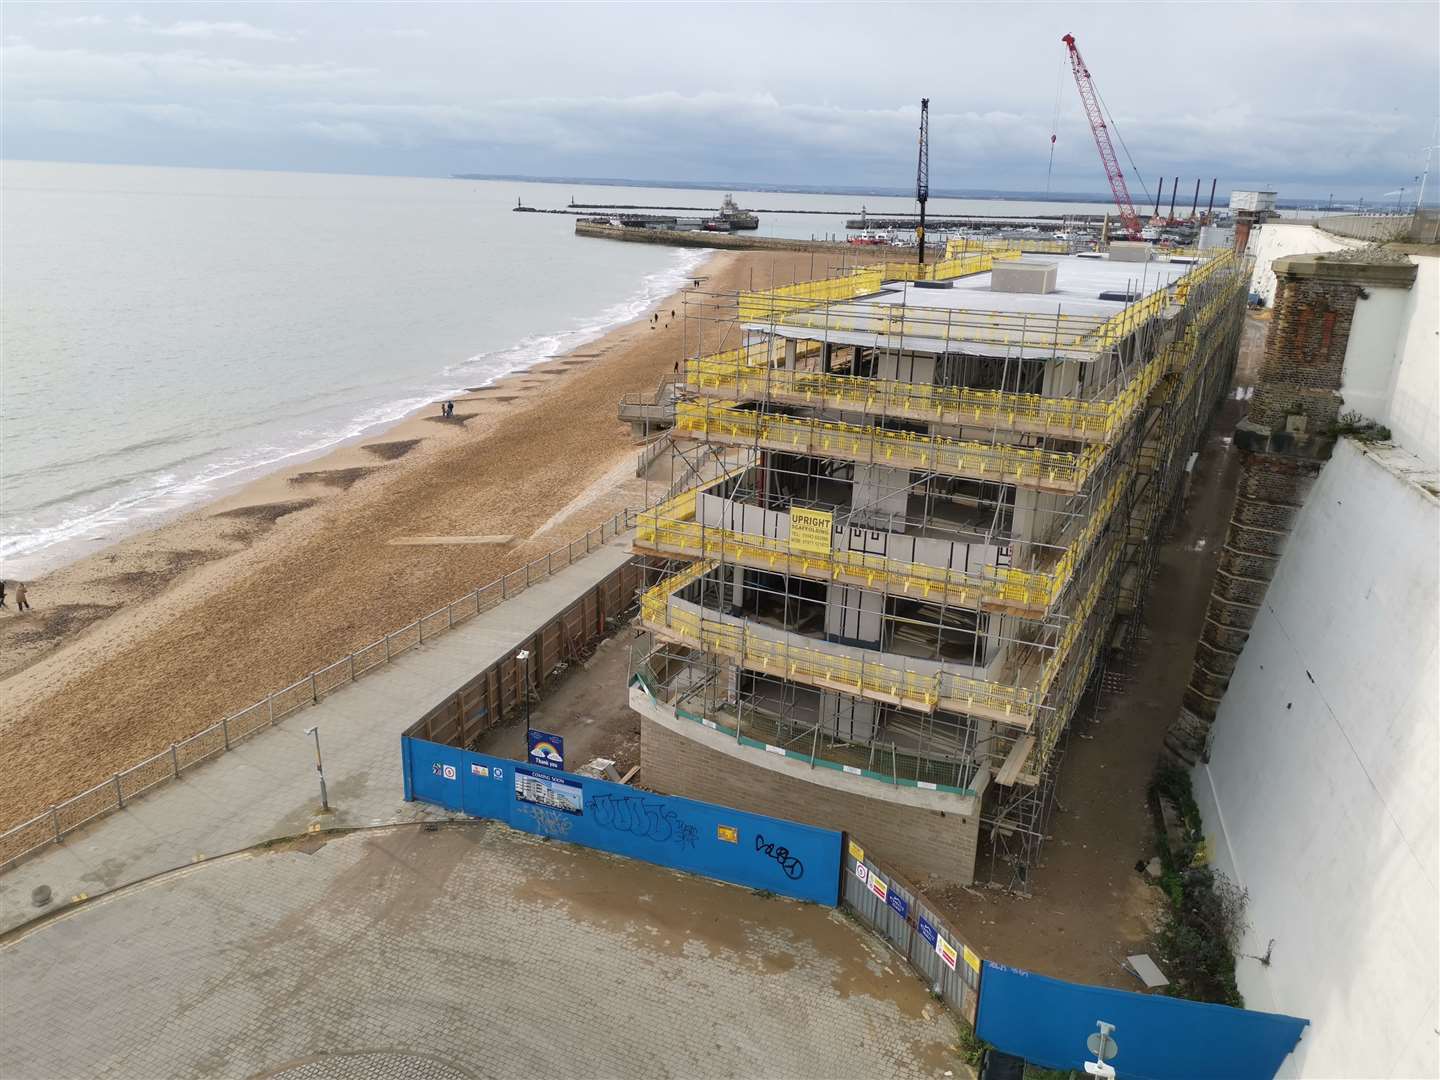 Royal Sands is taking shape in Ramsgate